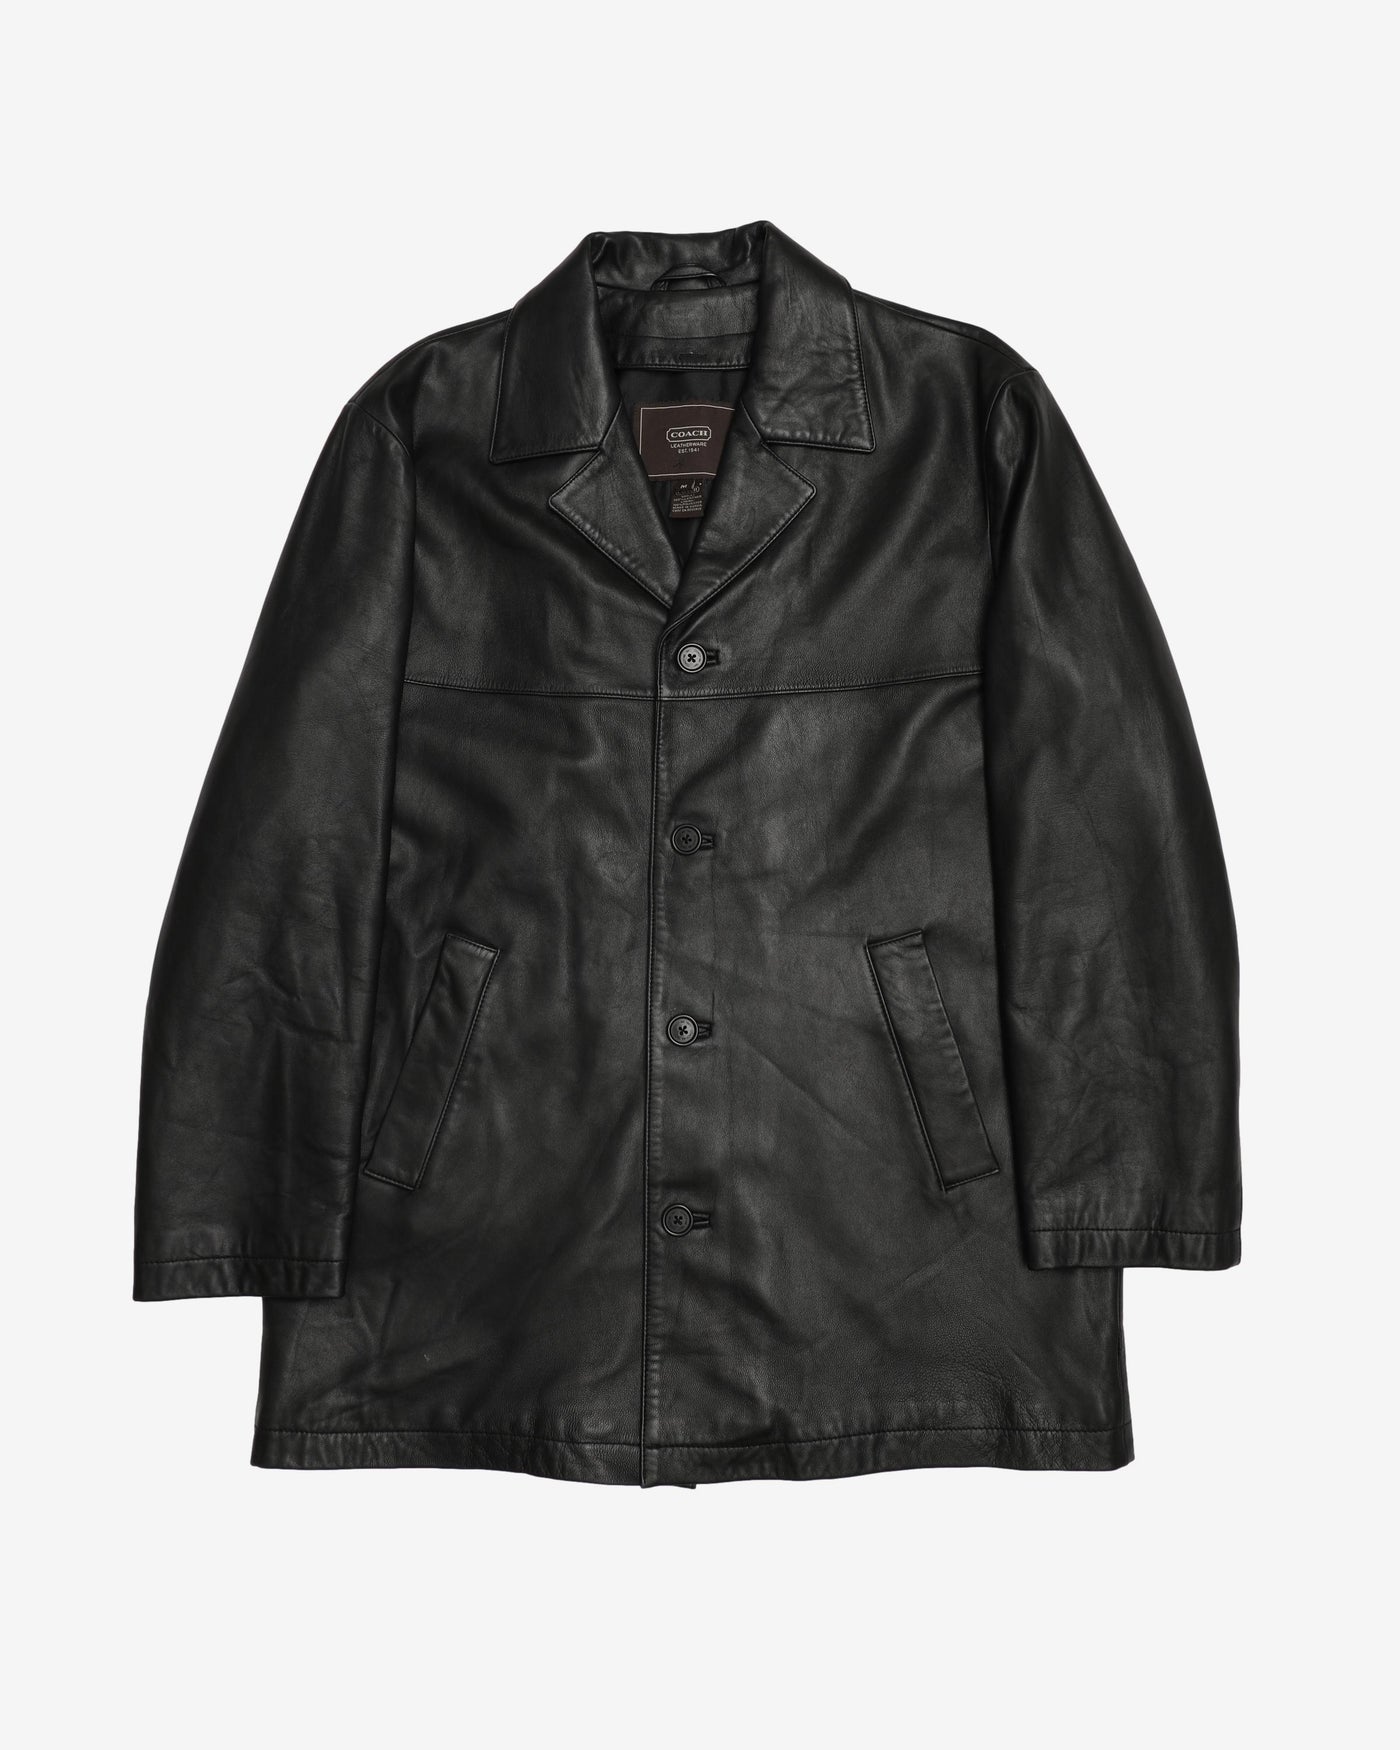 Coach Black Button Up Leather Jacket - M